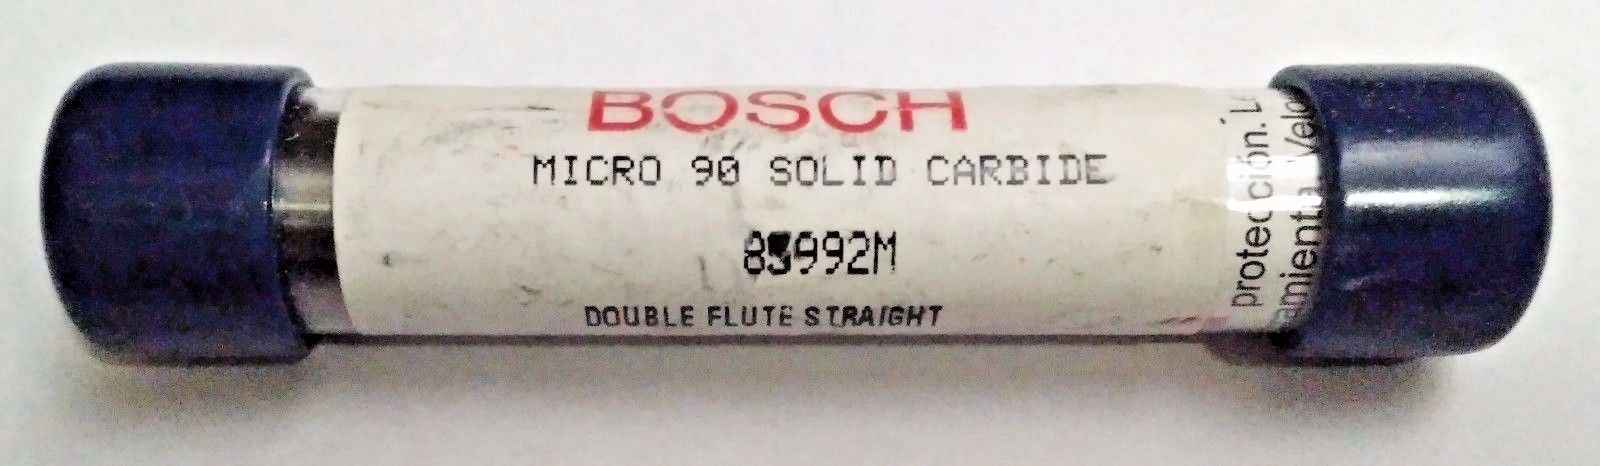 BOSCH 85992M Carbide 3/8" x 1-1/4" Straight Router Bit USA